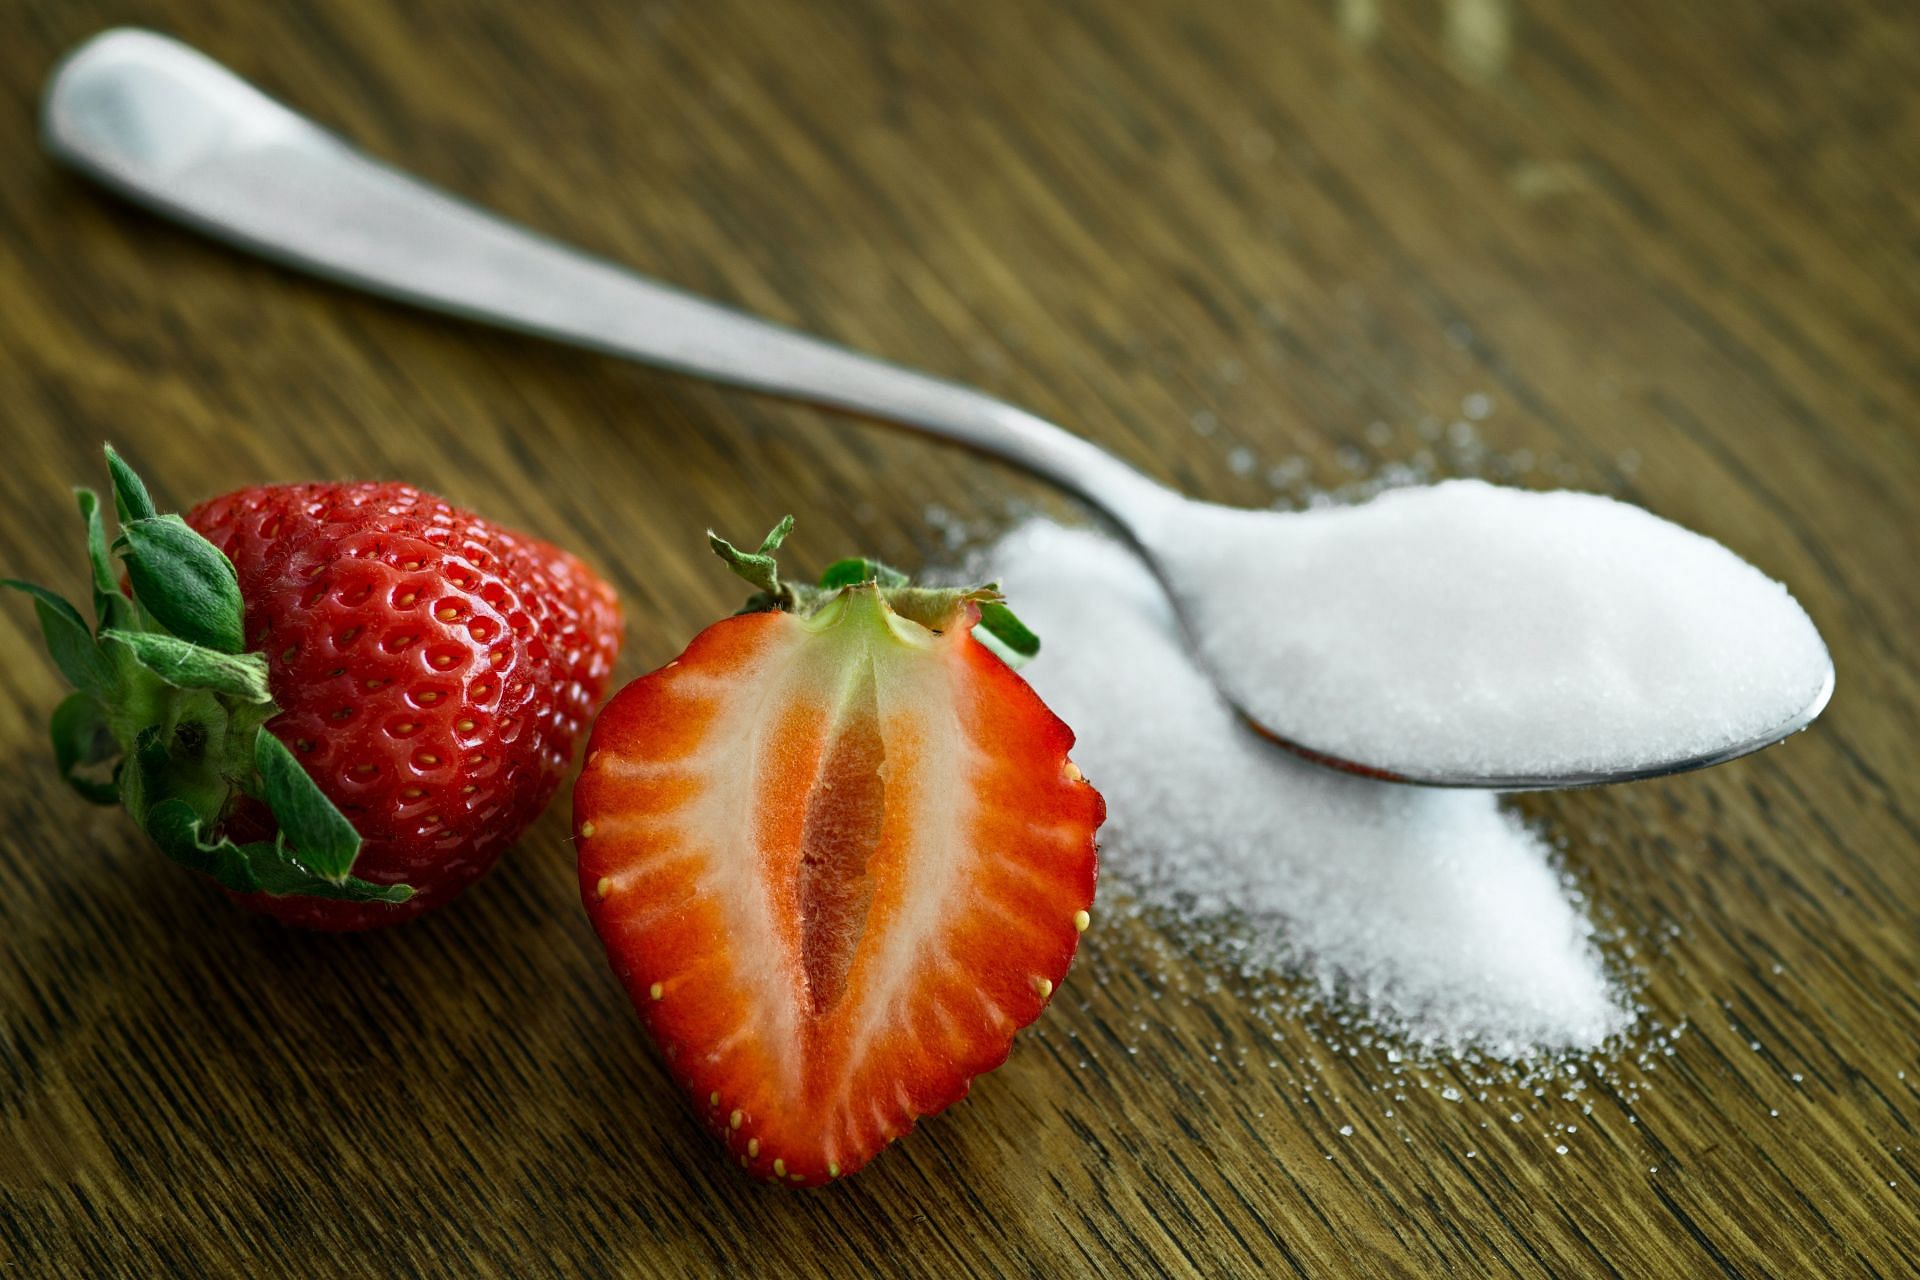 Sugar can spike your blood sugar level. (Image via Pexels/Mali Maeder)